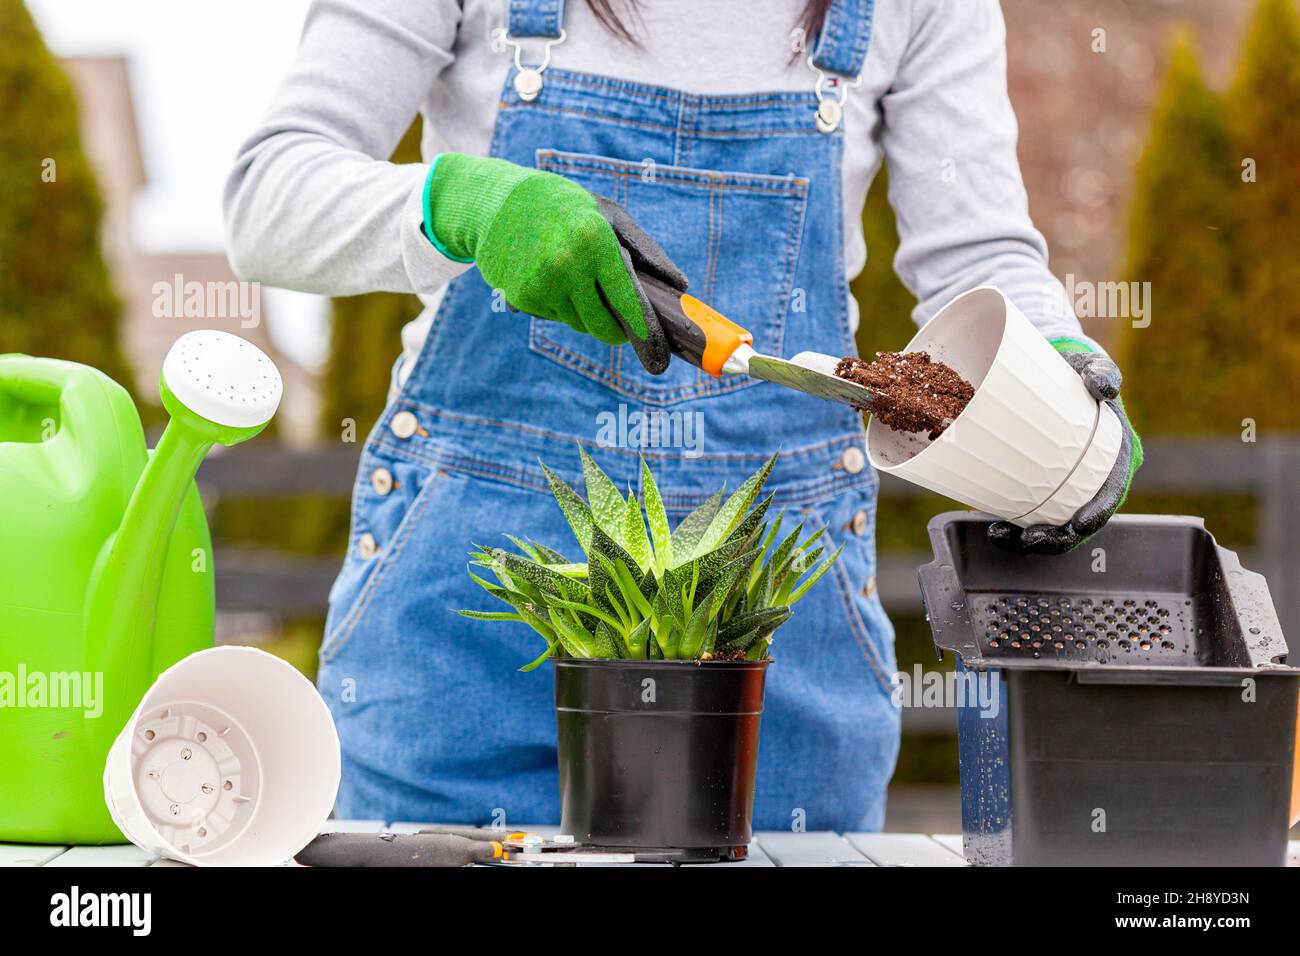 A woman gardener wearing overalls is planting new haworthia fasciata houseplants using potting soil, hand shovel and gloves. Hobby, green finger, gard Stock Photo